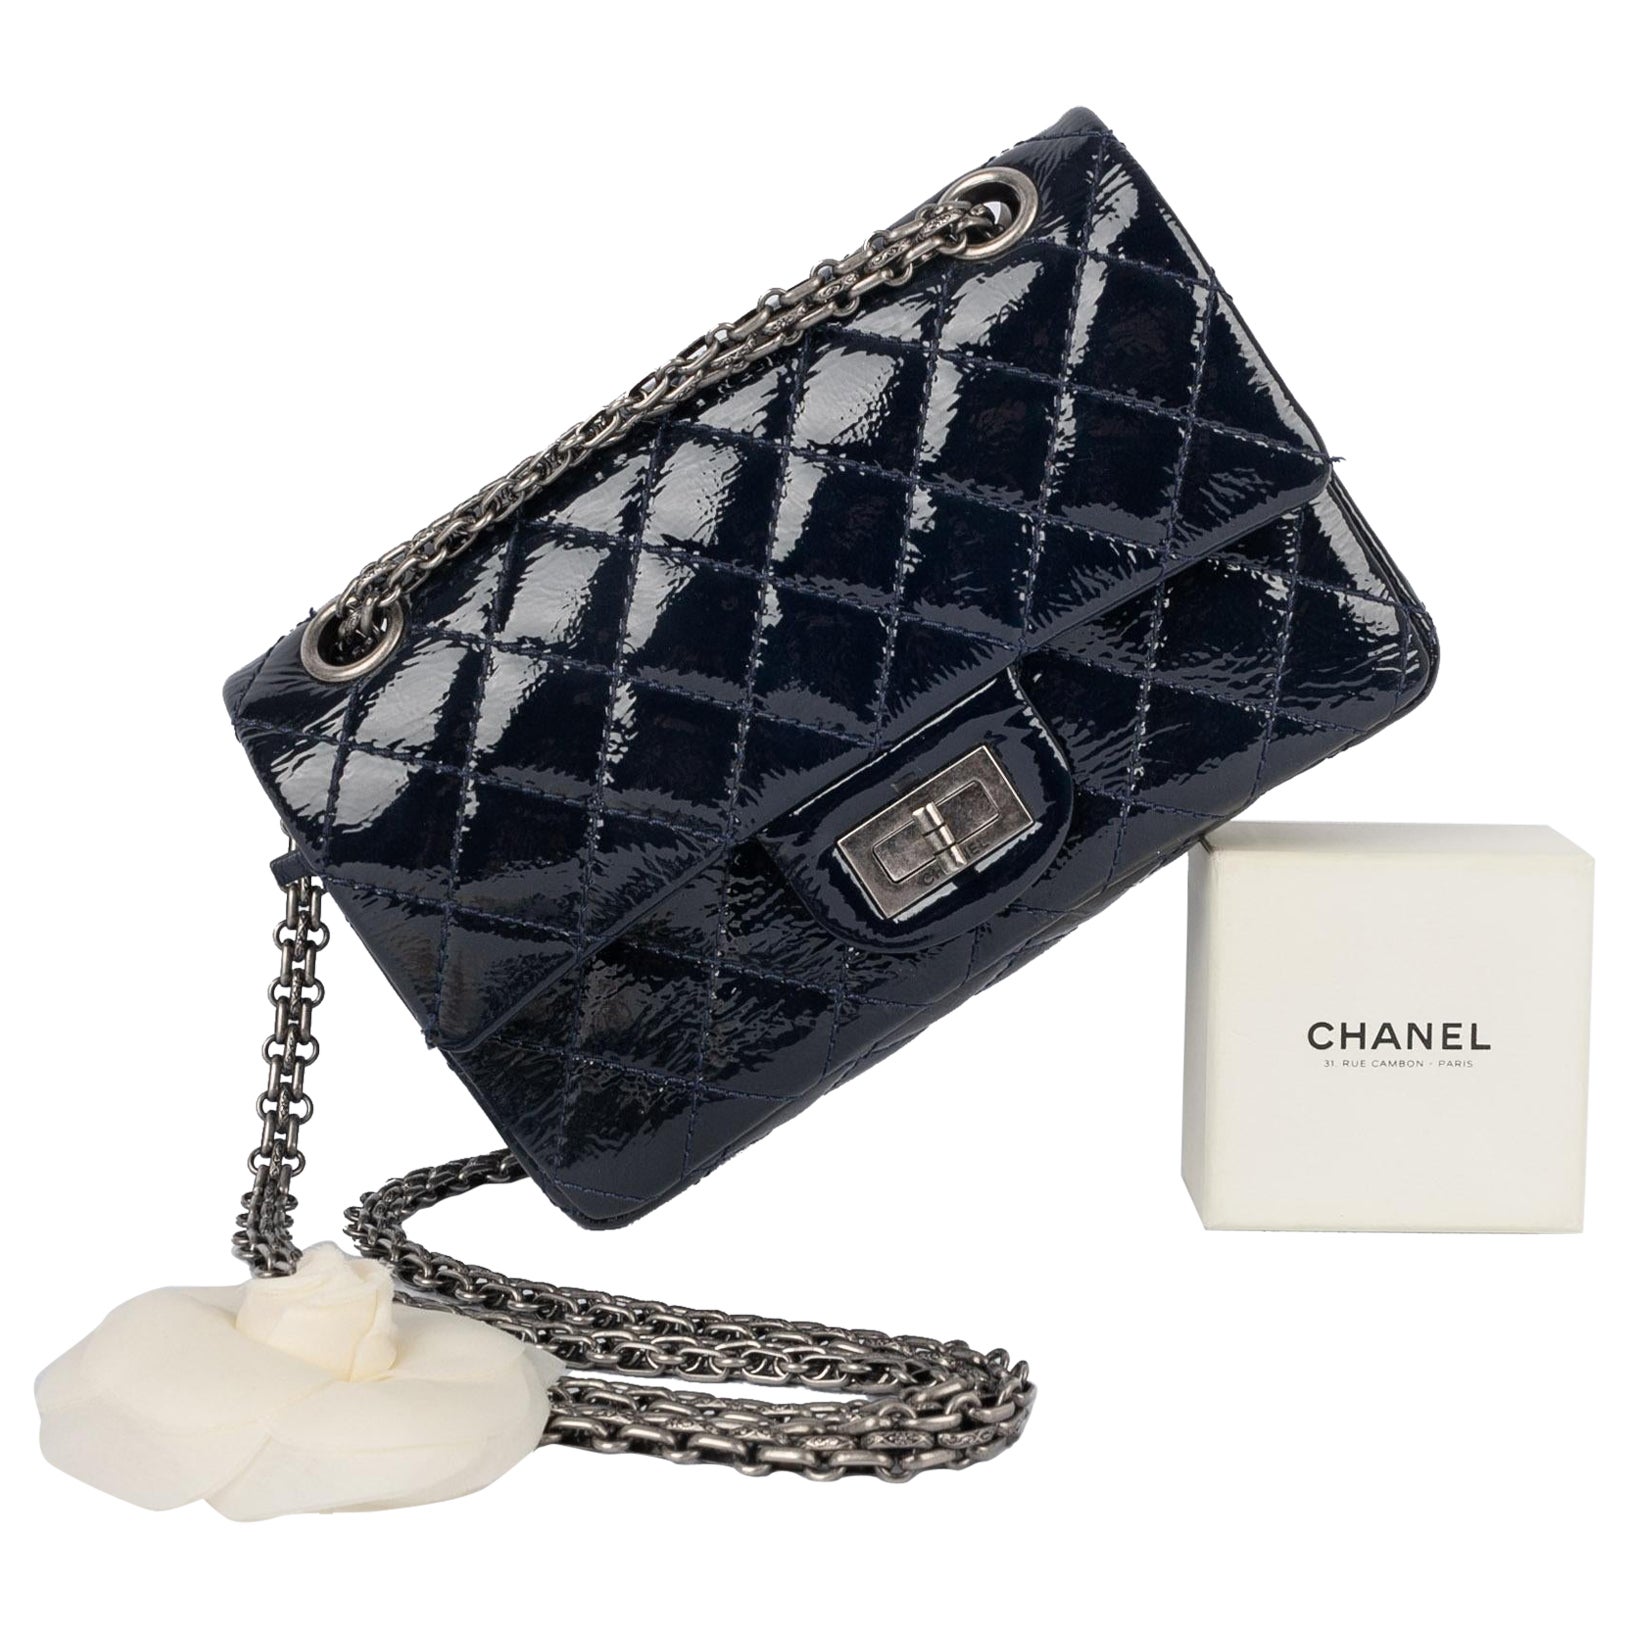 Chanel 2.55 bag 2010/2011 For Sale